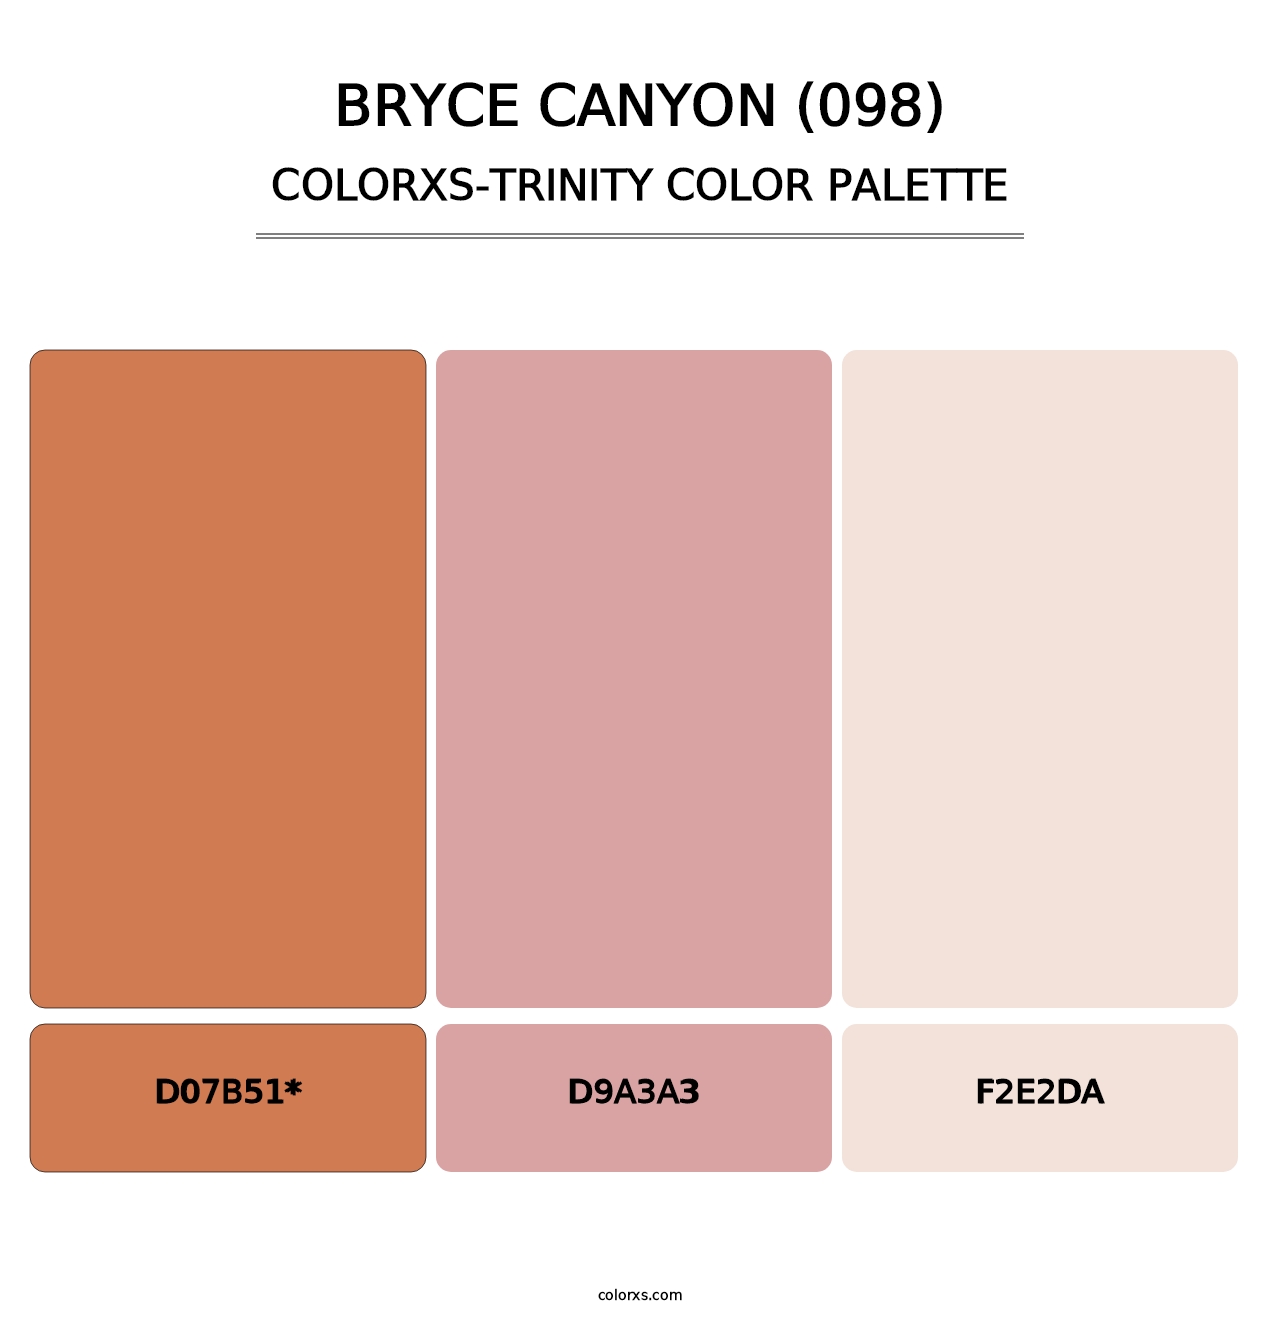 Bryce Canyon (098) - Colorxs Trinity Palette